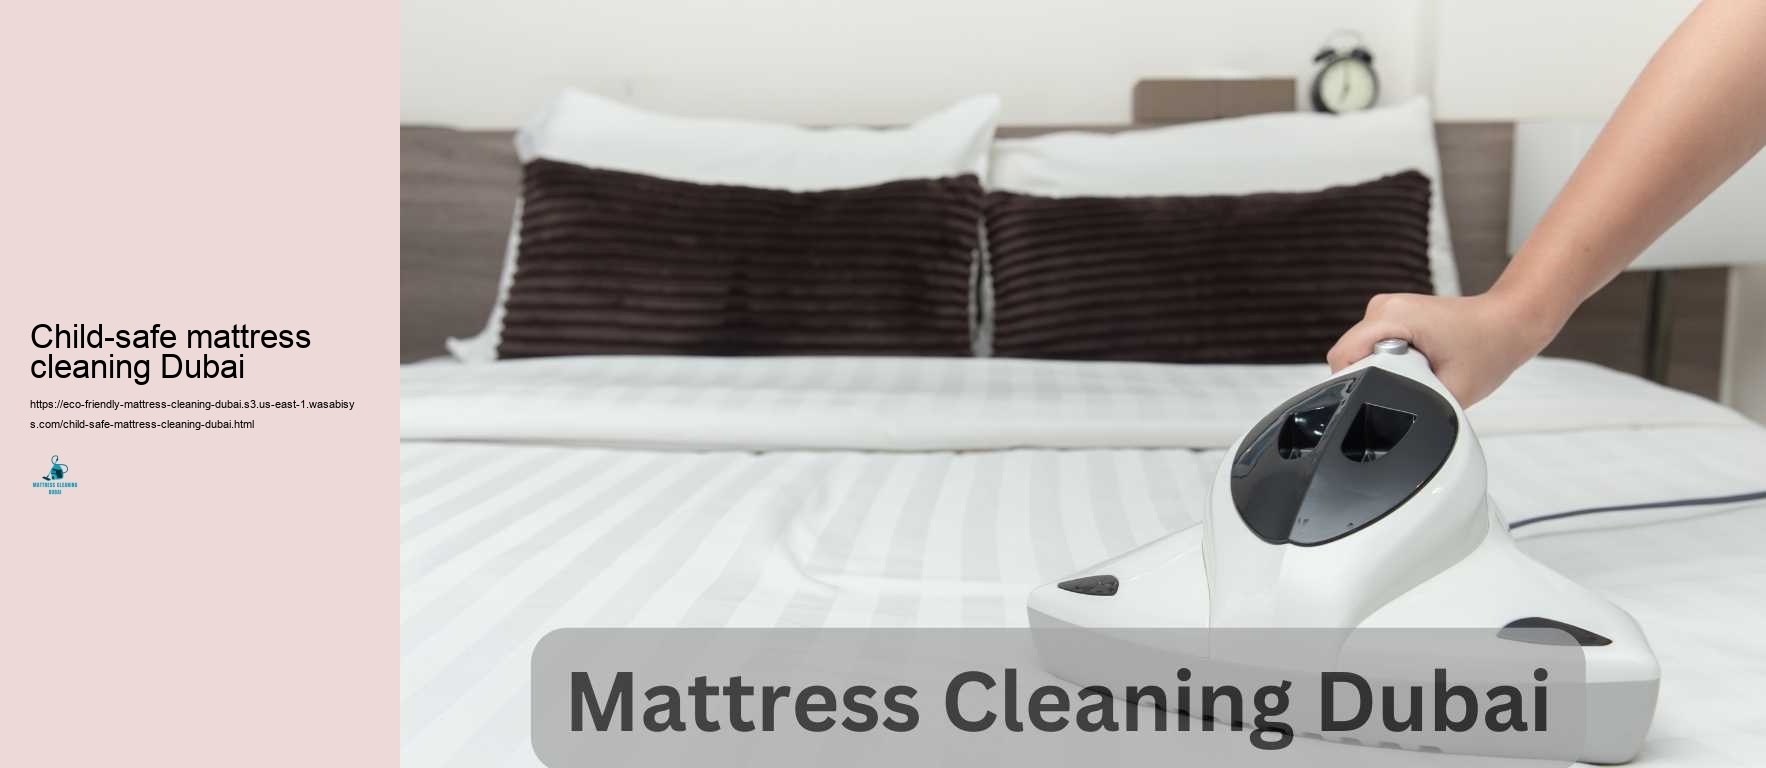 Child-safe mattress cleaning Dubai